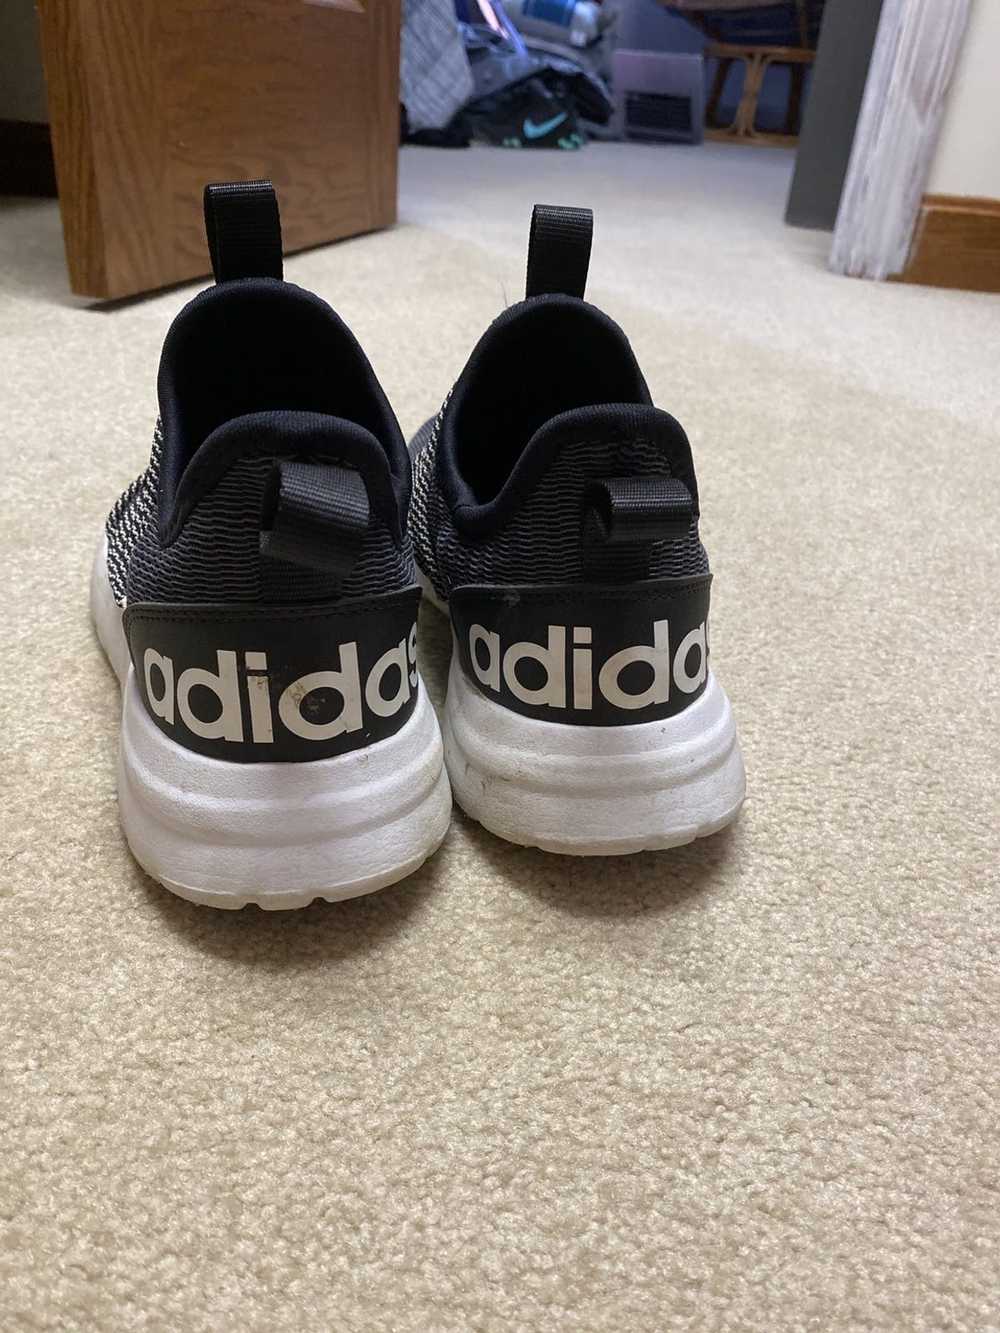 Adidas Gentler used adidas running shoes - image 3